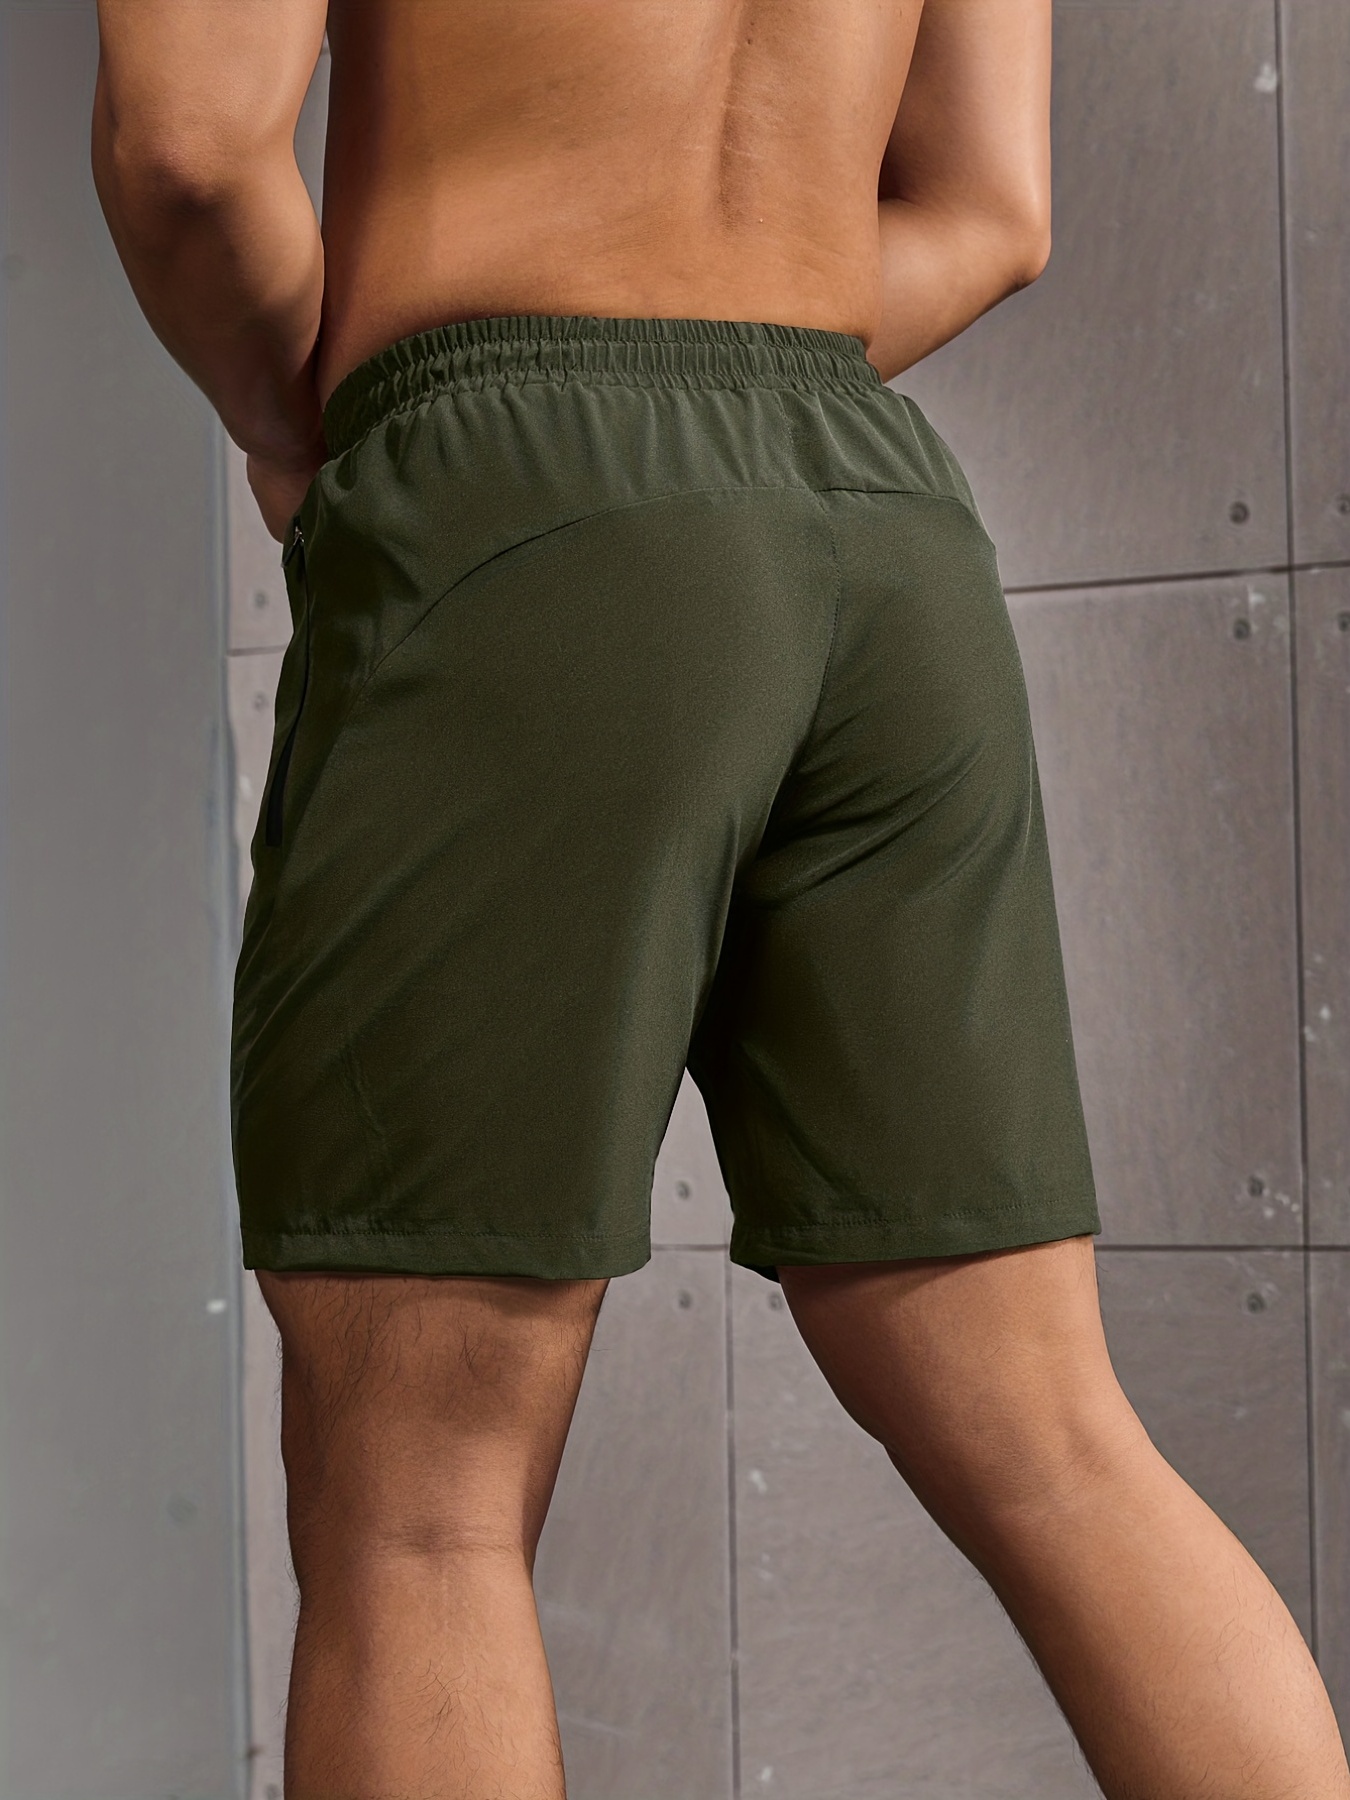 A4 N5255 - 9 Micro Mesh Short $10.17 - Men's Shorts